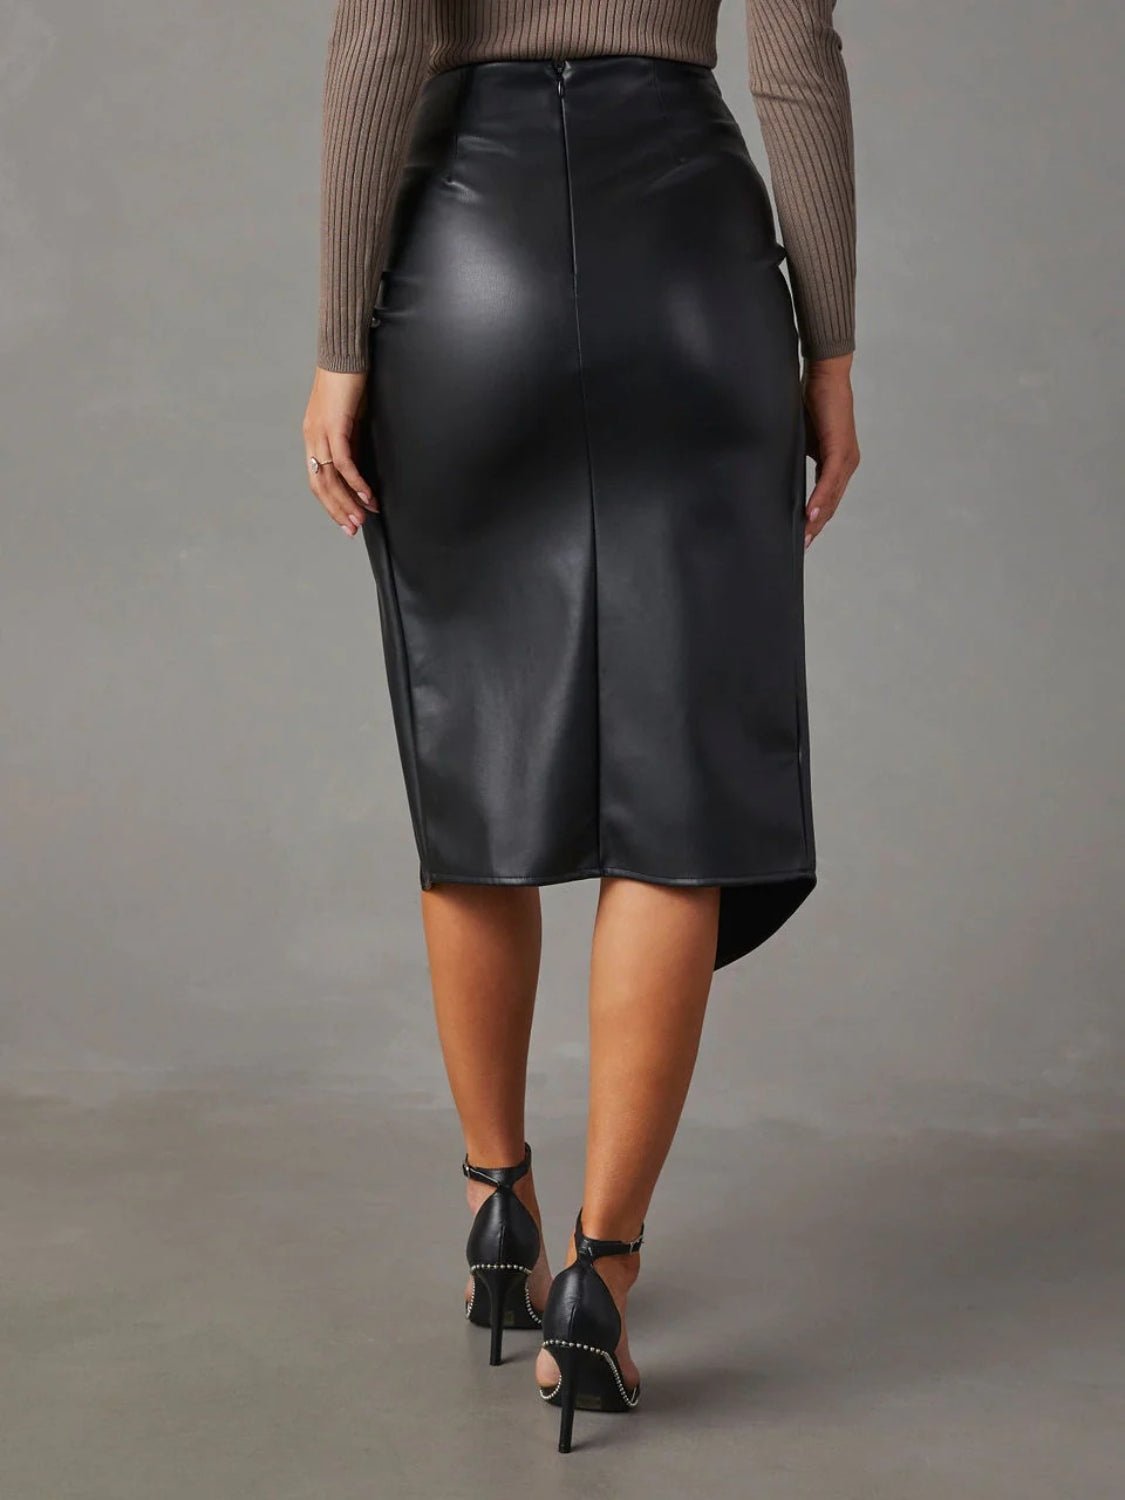 Twist Detail High Waist Skirt - Fashion Girl Online Store